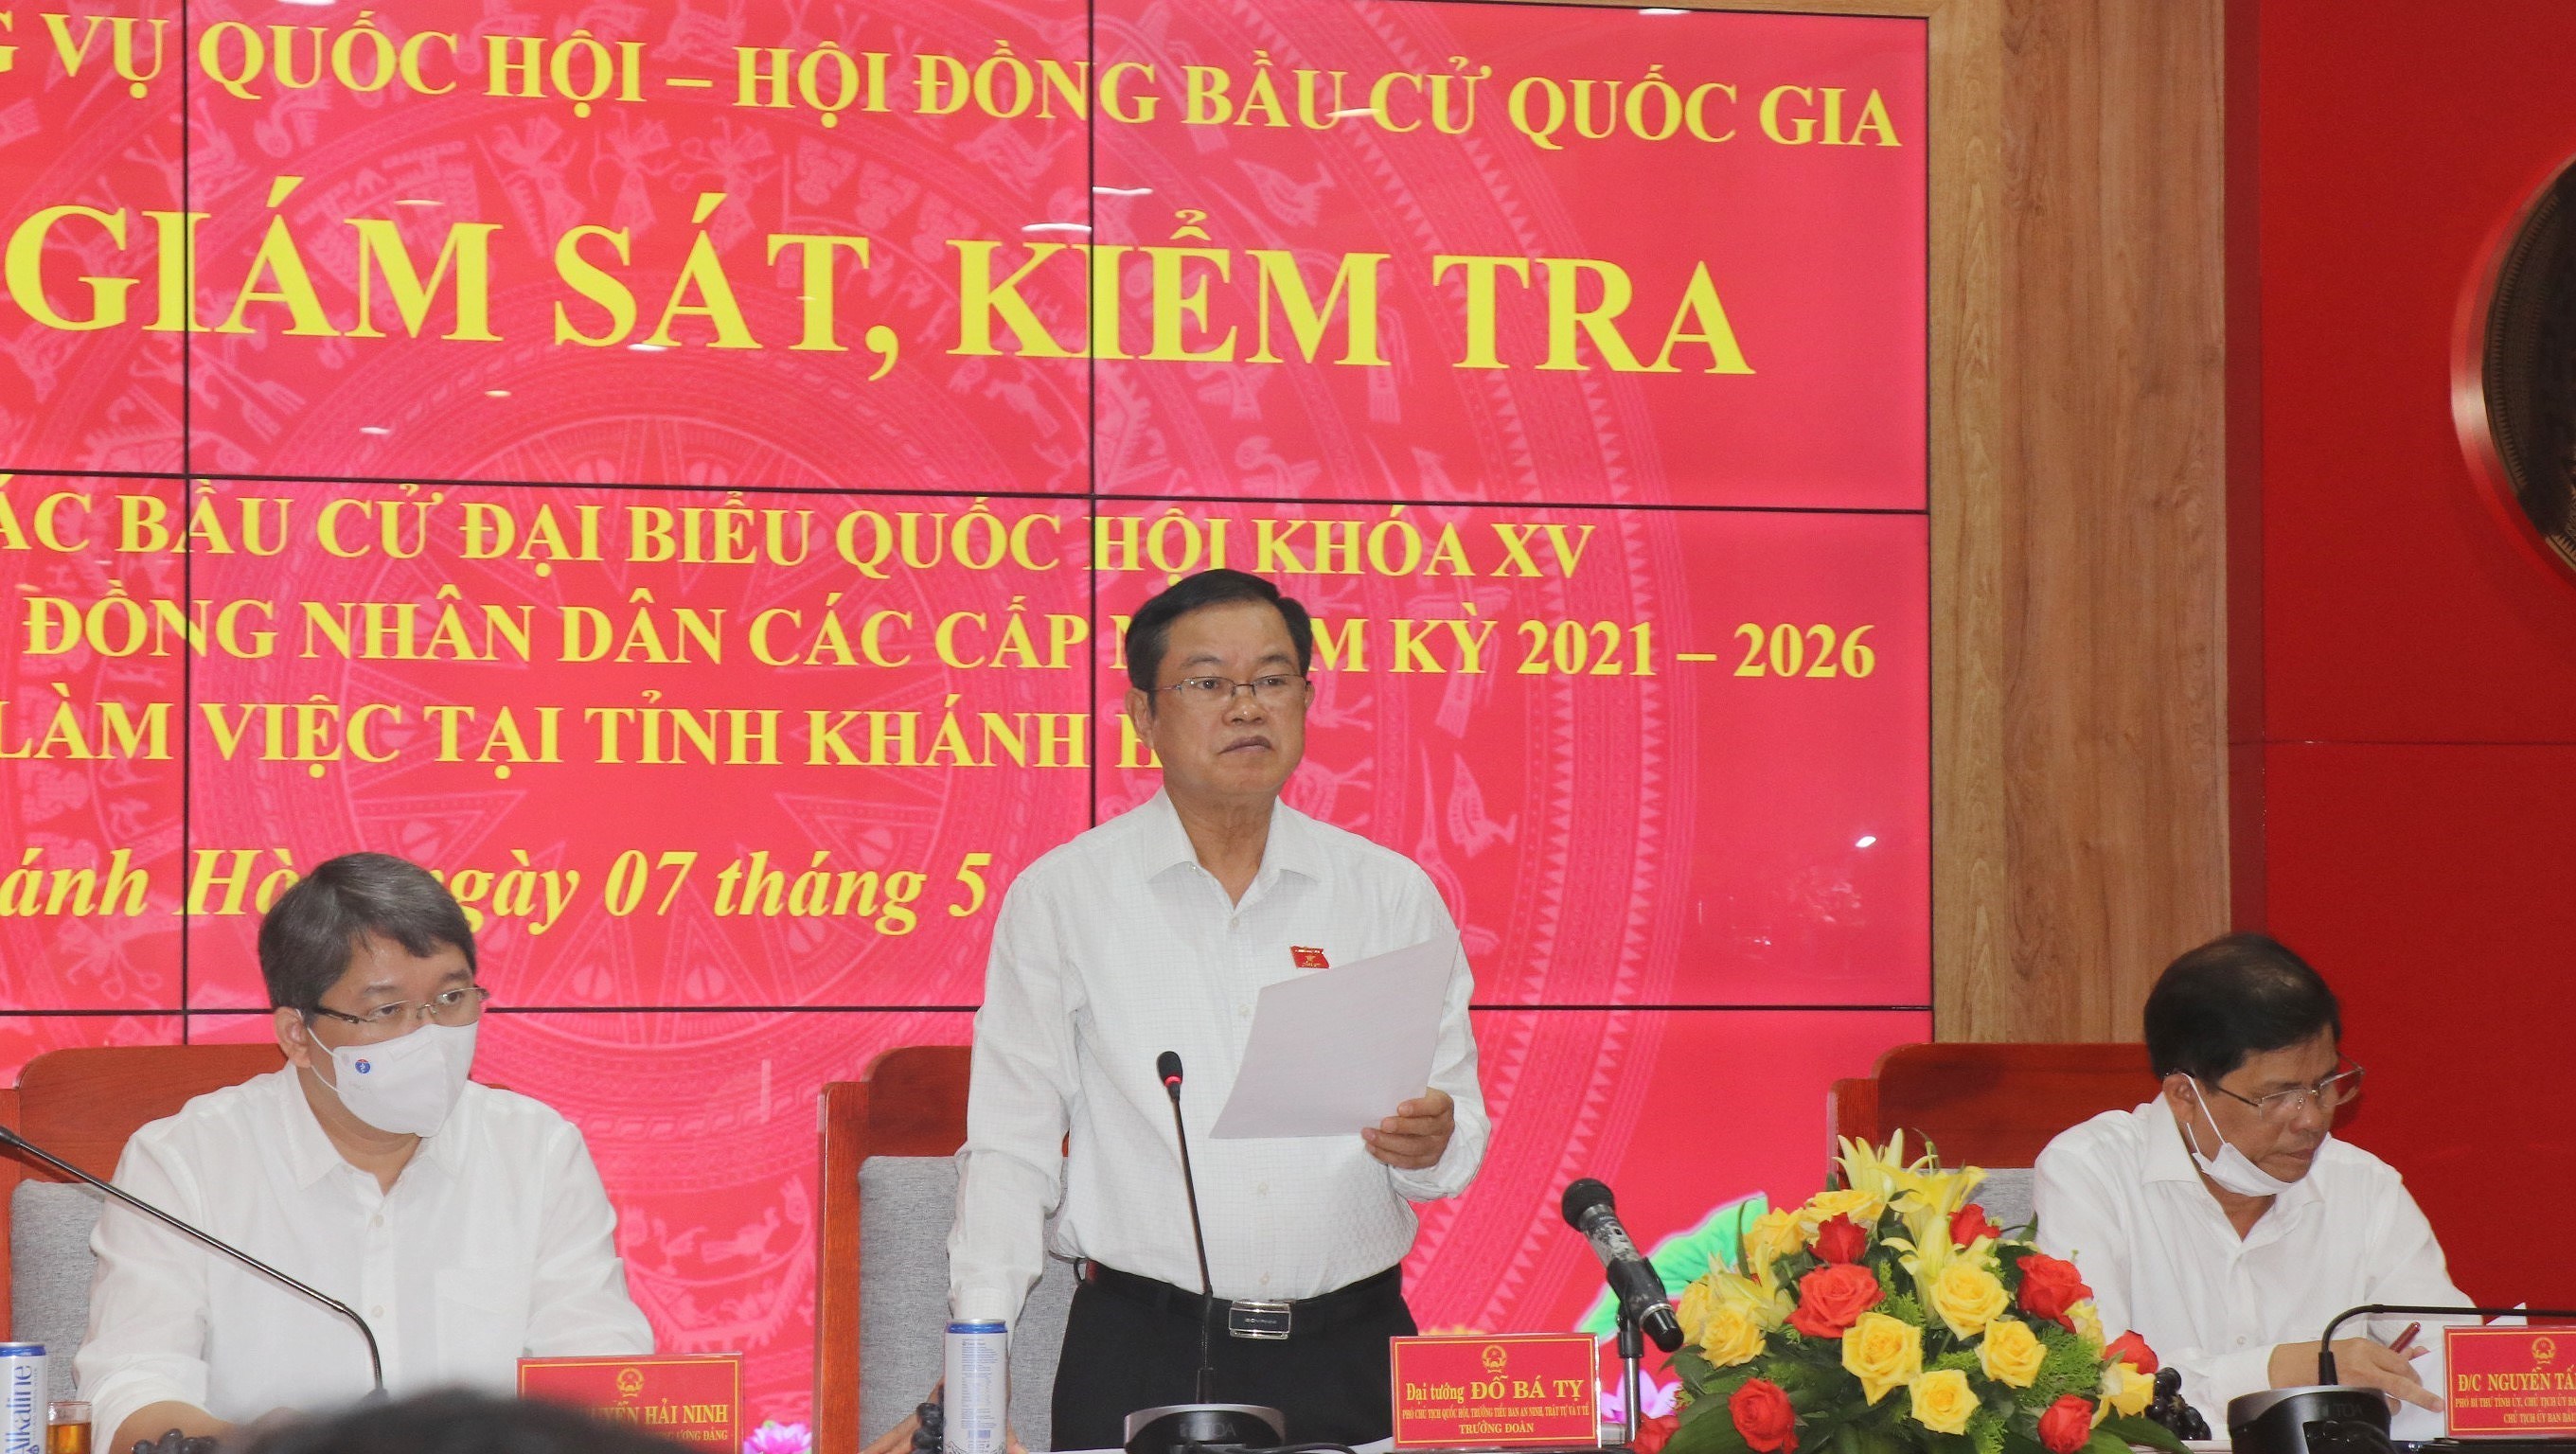 Celebraran elecciones anticipadas en varios barrios del distrito insular vietnamita de Truong Sa hinh anh 2